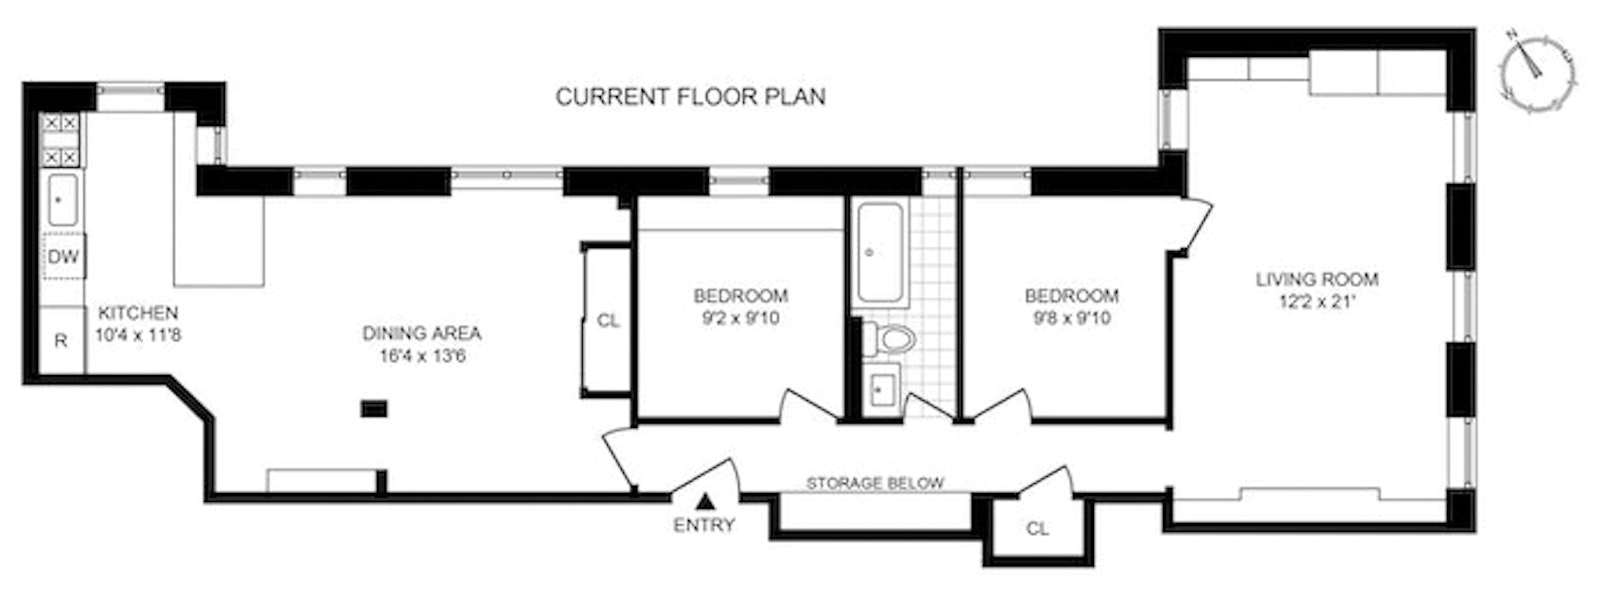 Floorplan for 126 West 11th Street, 42